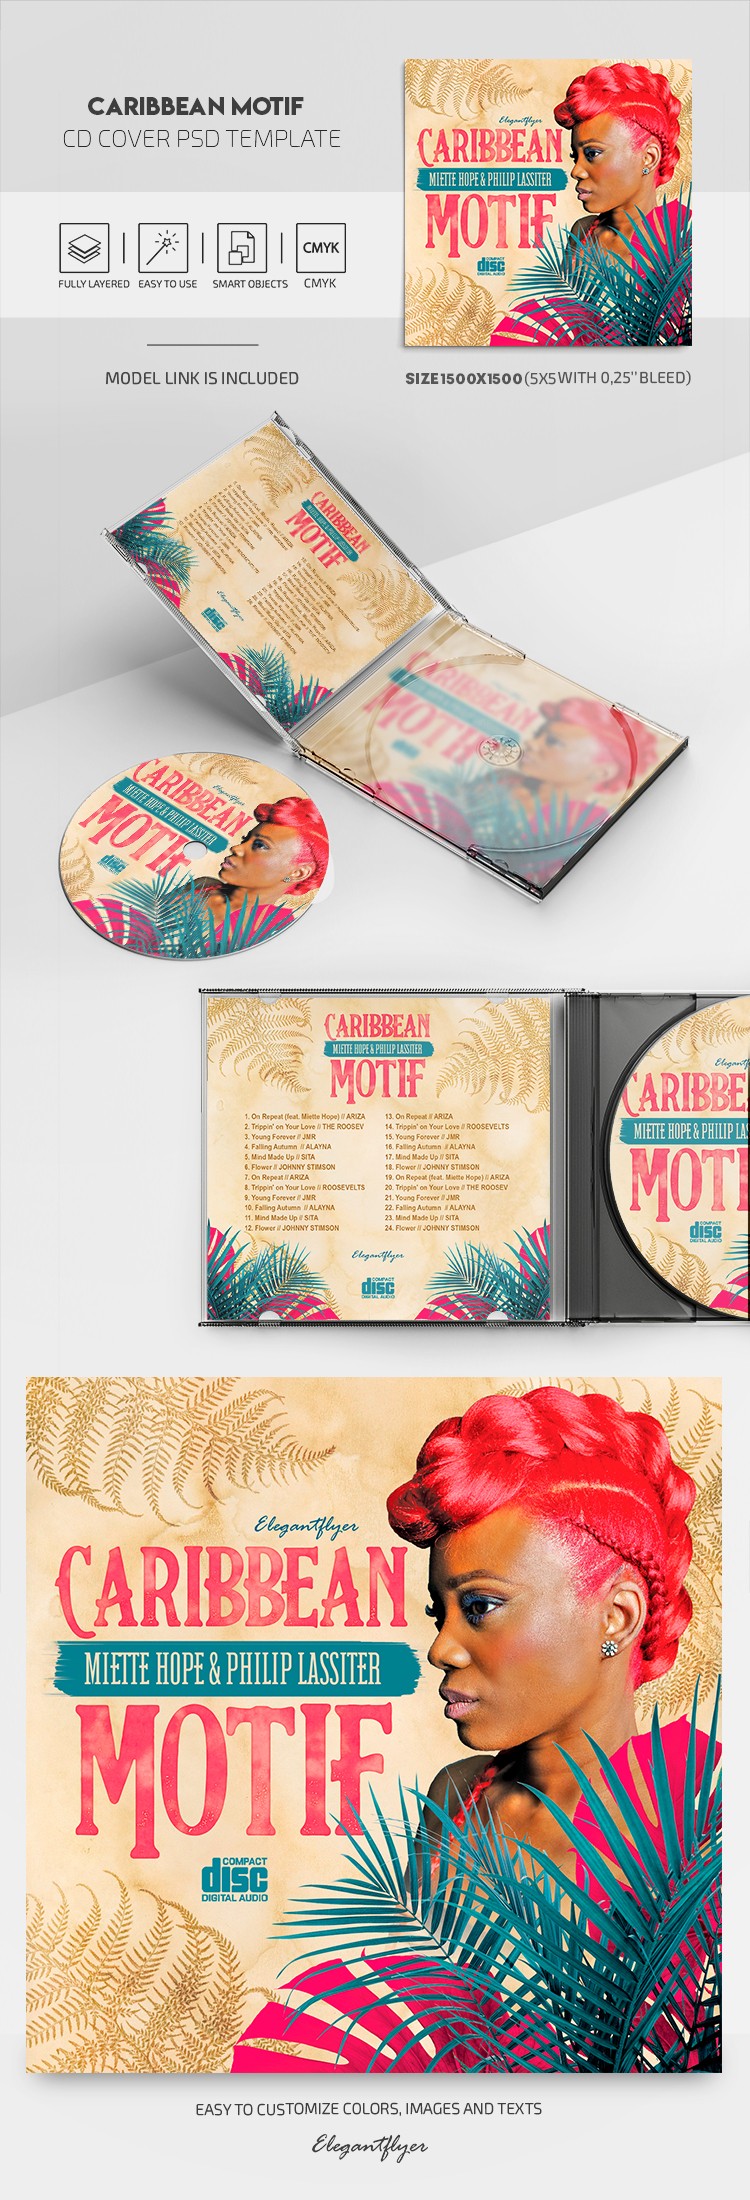 Caribbean Motif CD Cover by ElegantFlyer